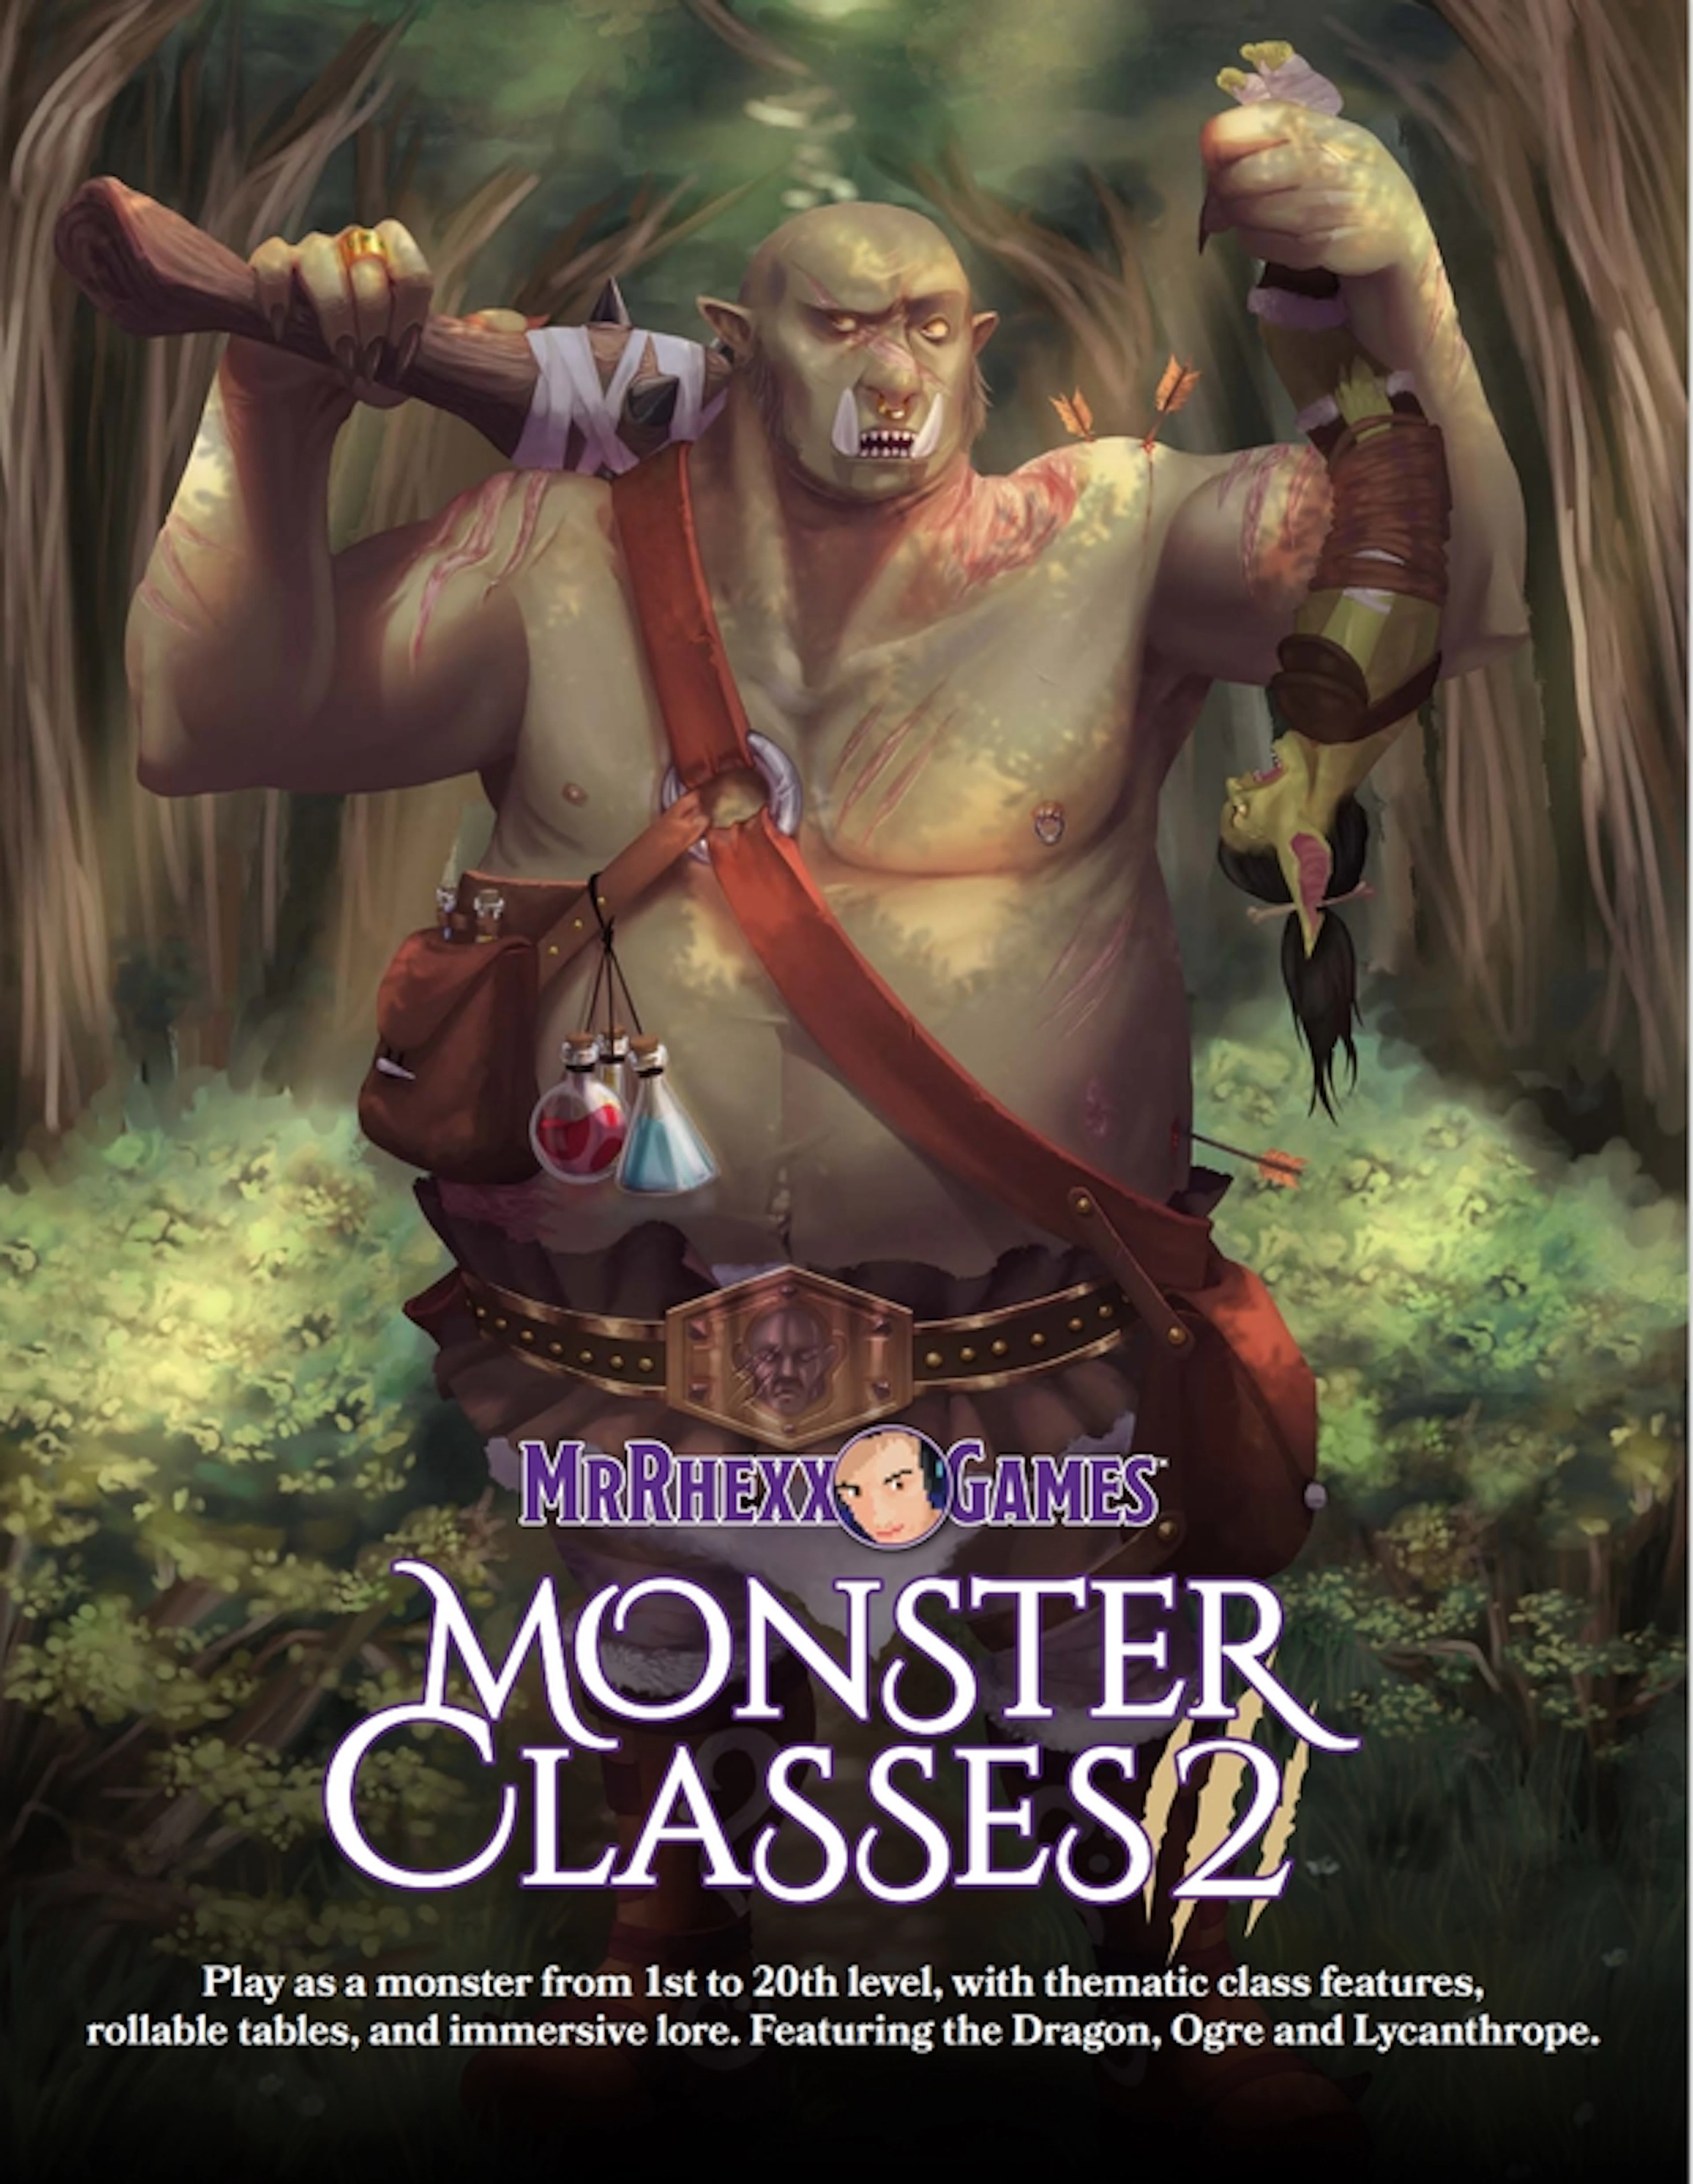 MrRhexx's Monster Classes 2